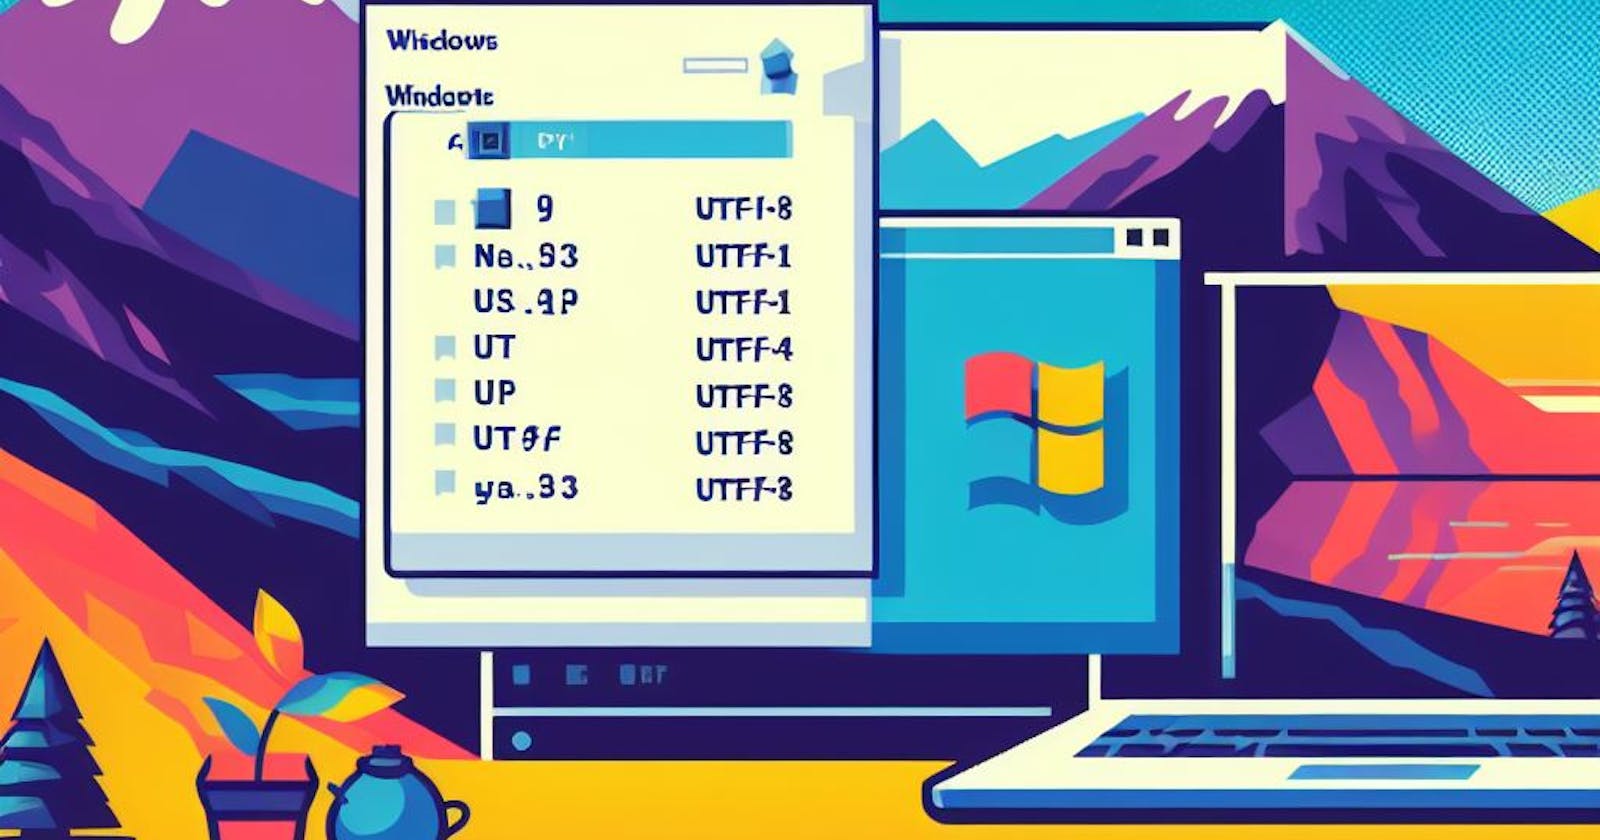 Converting a file from Windows format (utf-16) to Ubuntu format (utf-8)